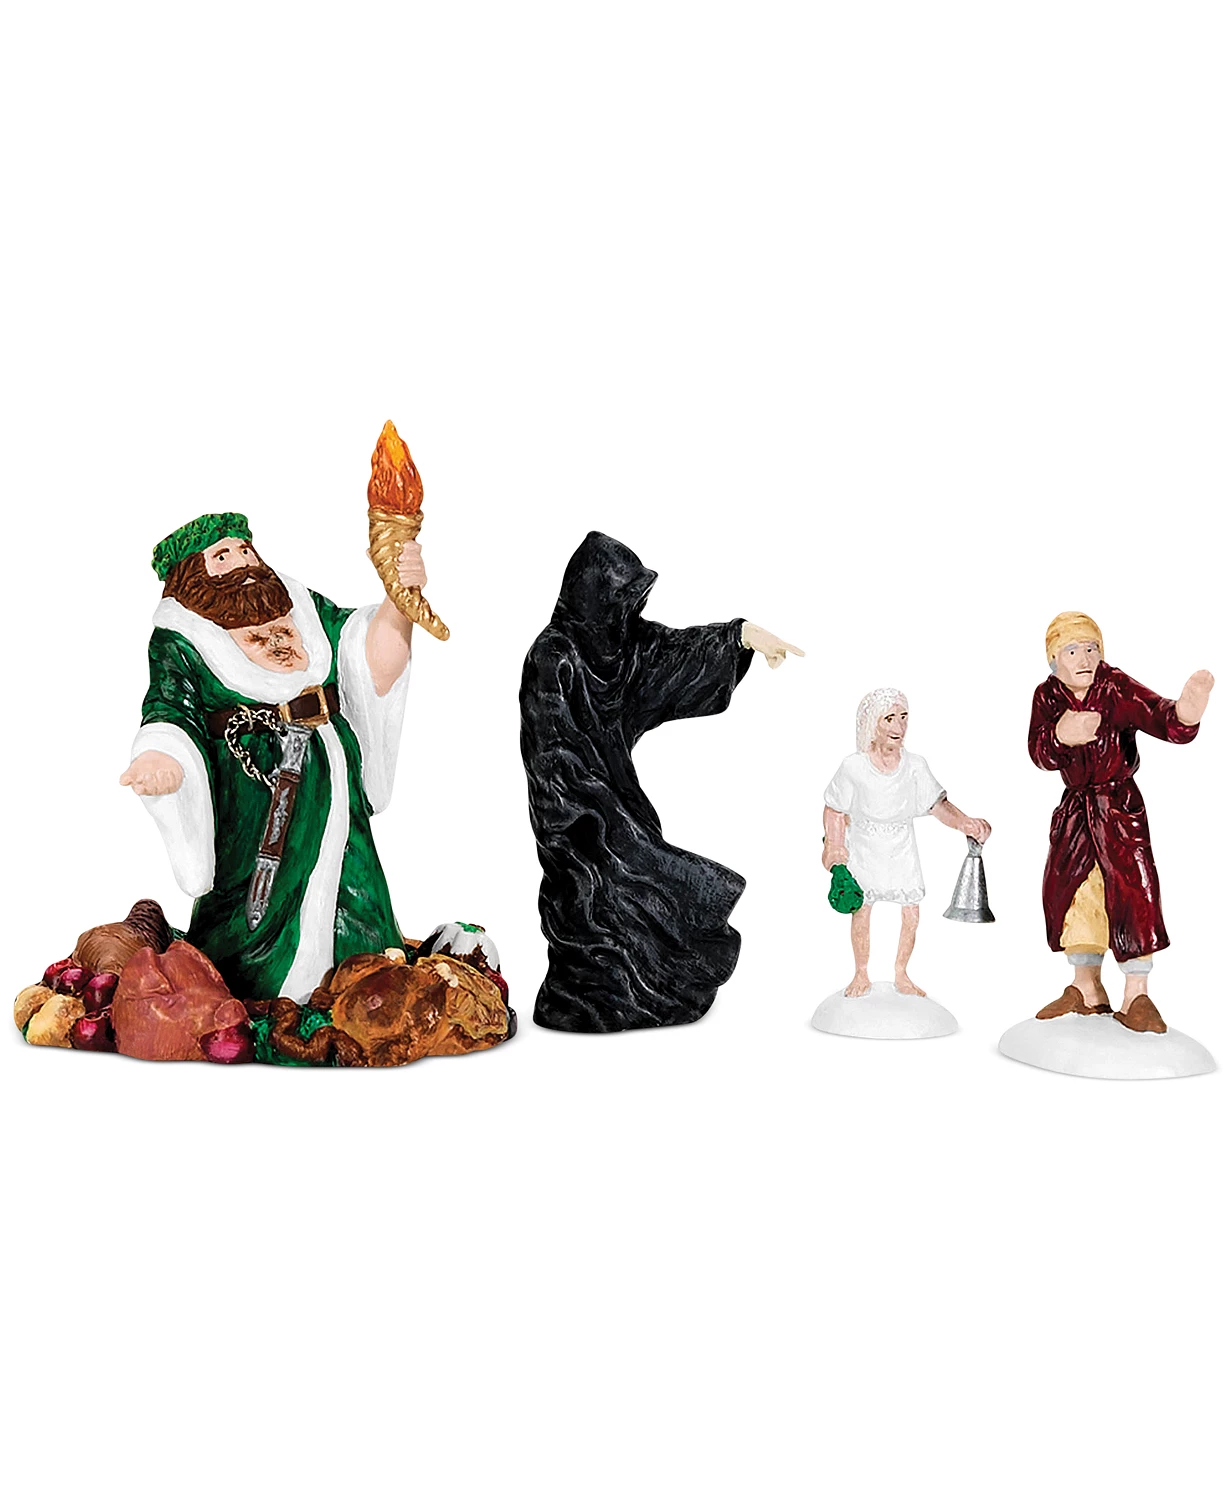 Department 56 Dicken's Village Christmas Carol Visit Collectible Figurine